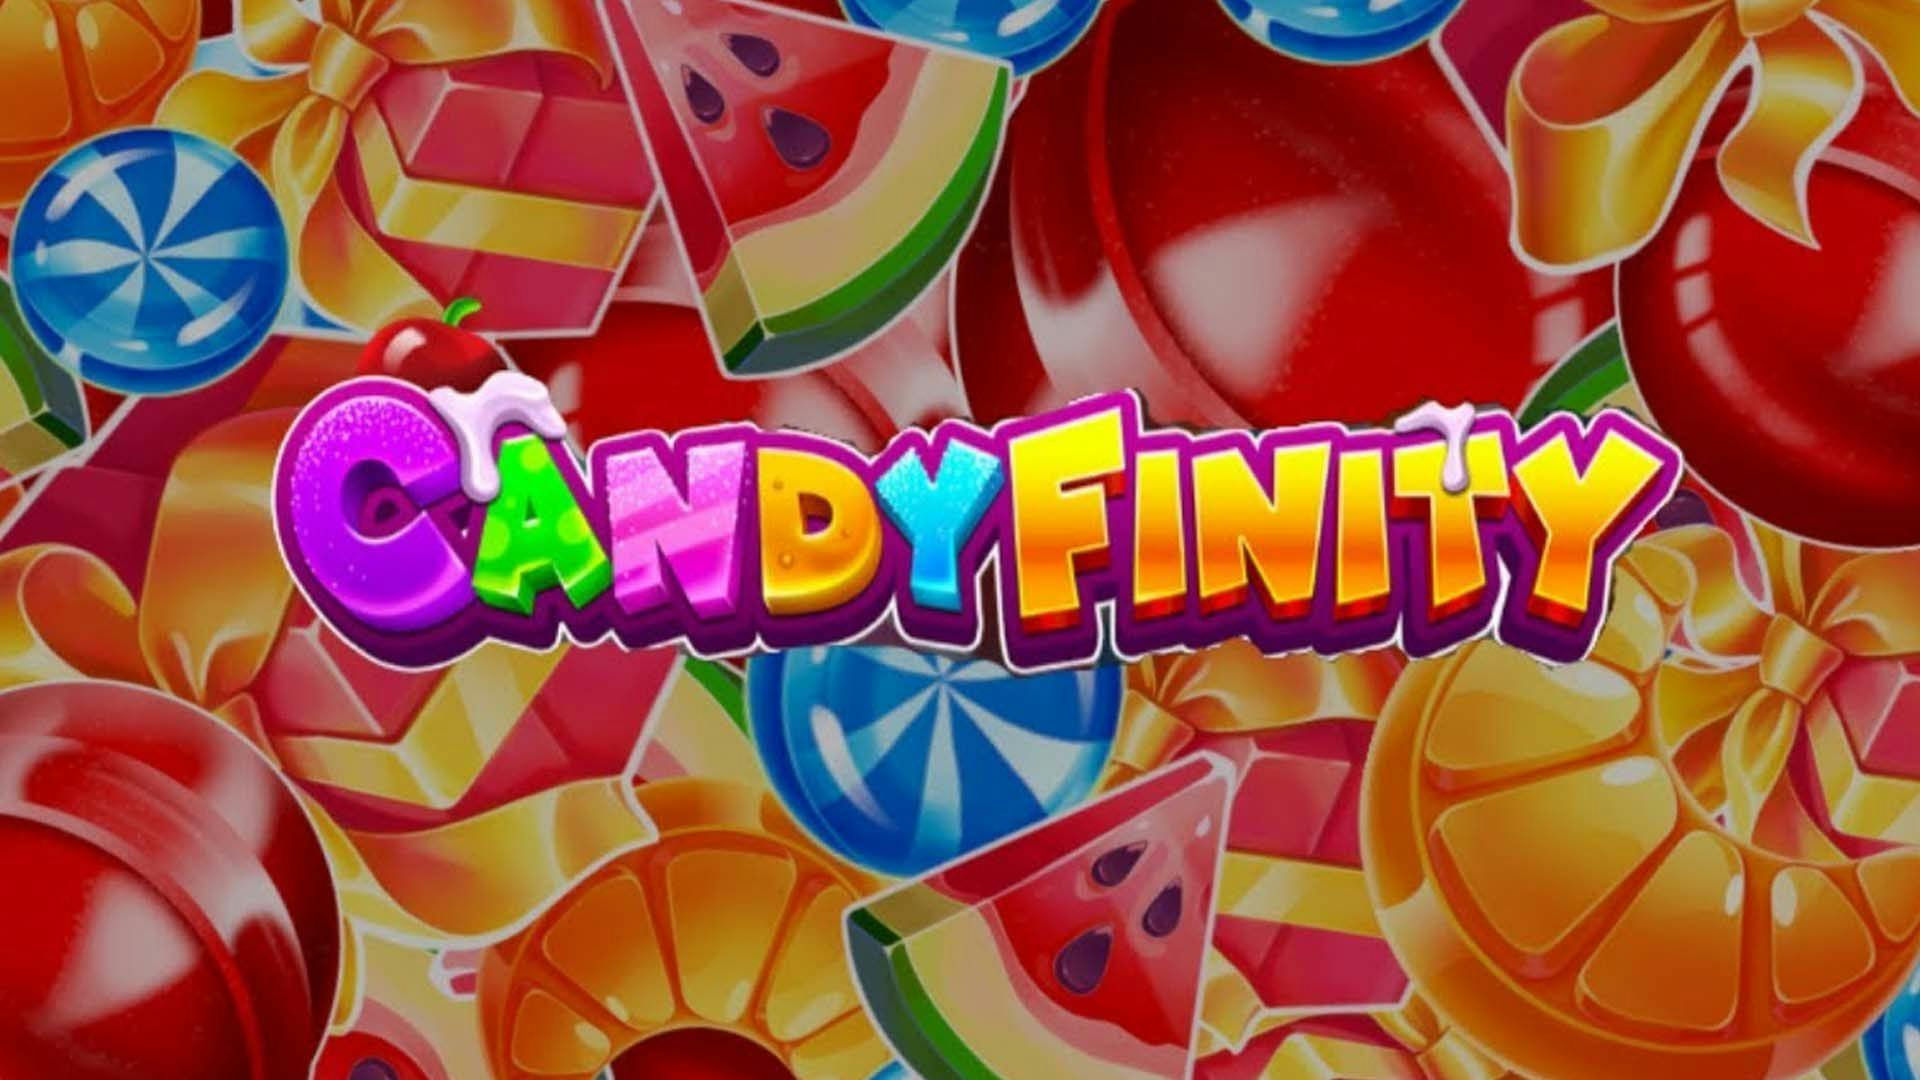 Candyfinity Slot Machine Online Free Game Play